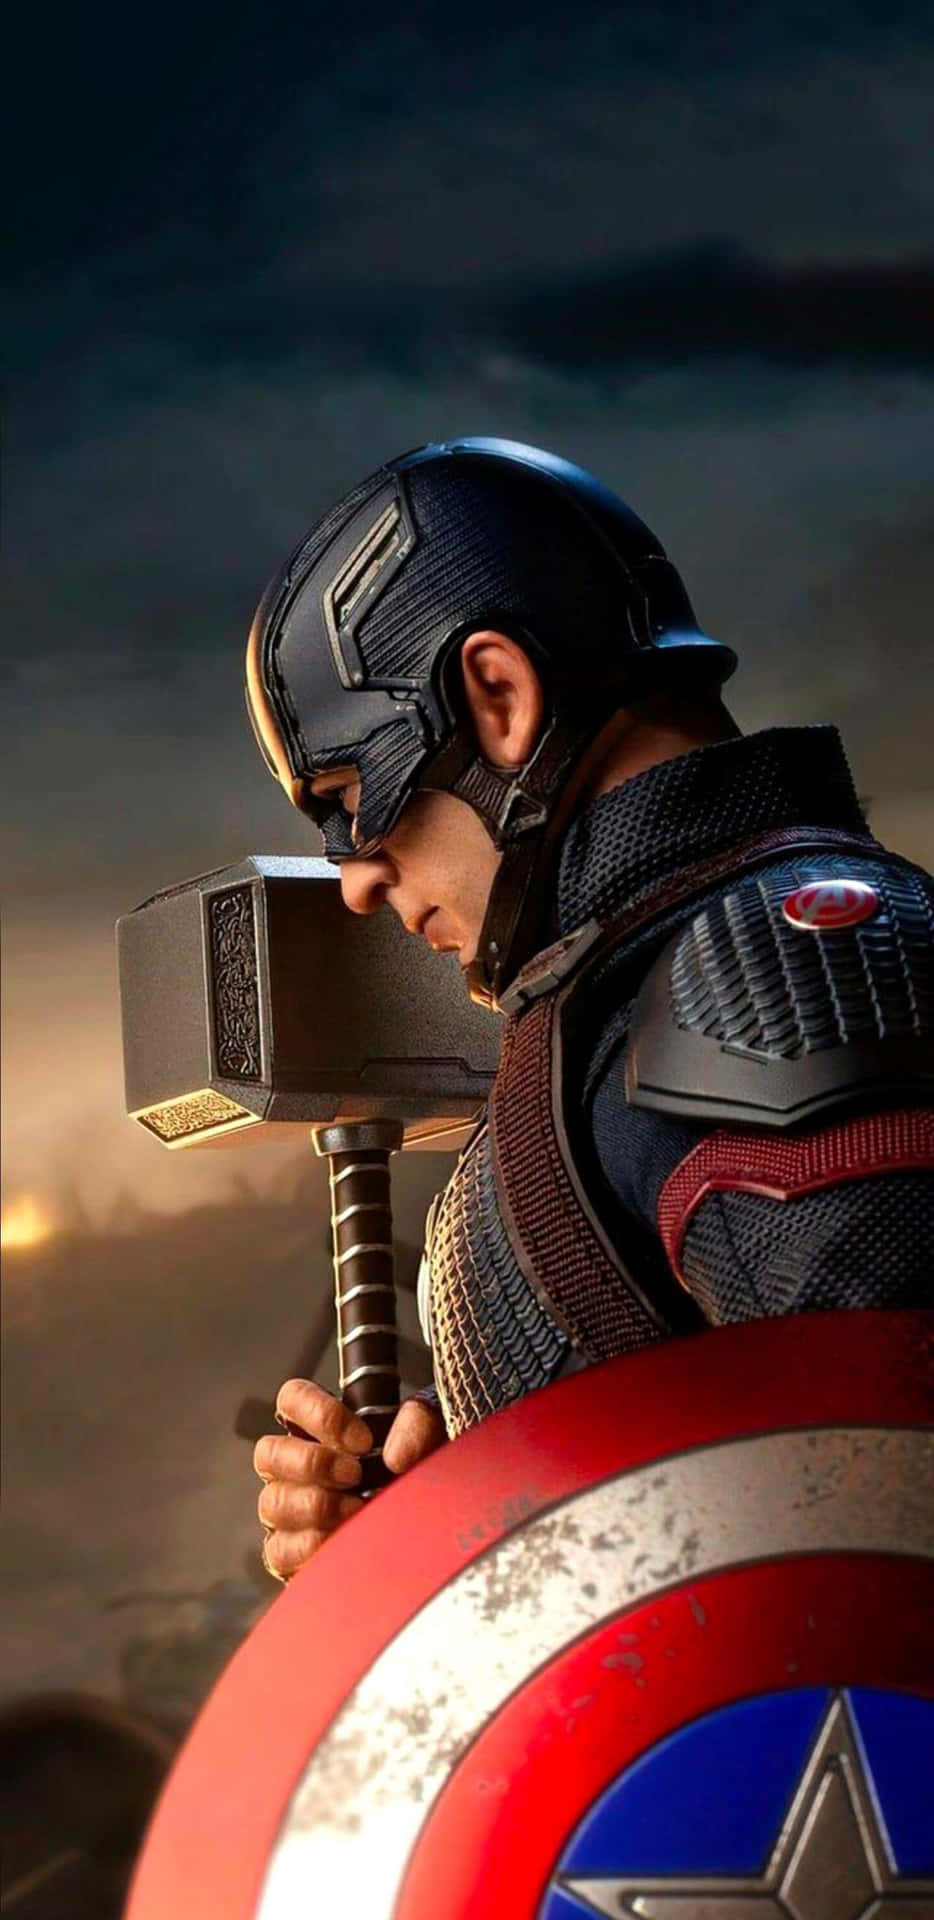 Pixel3xl Hintergrund Captain America Avengers Endgame